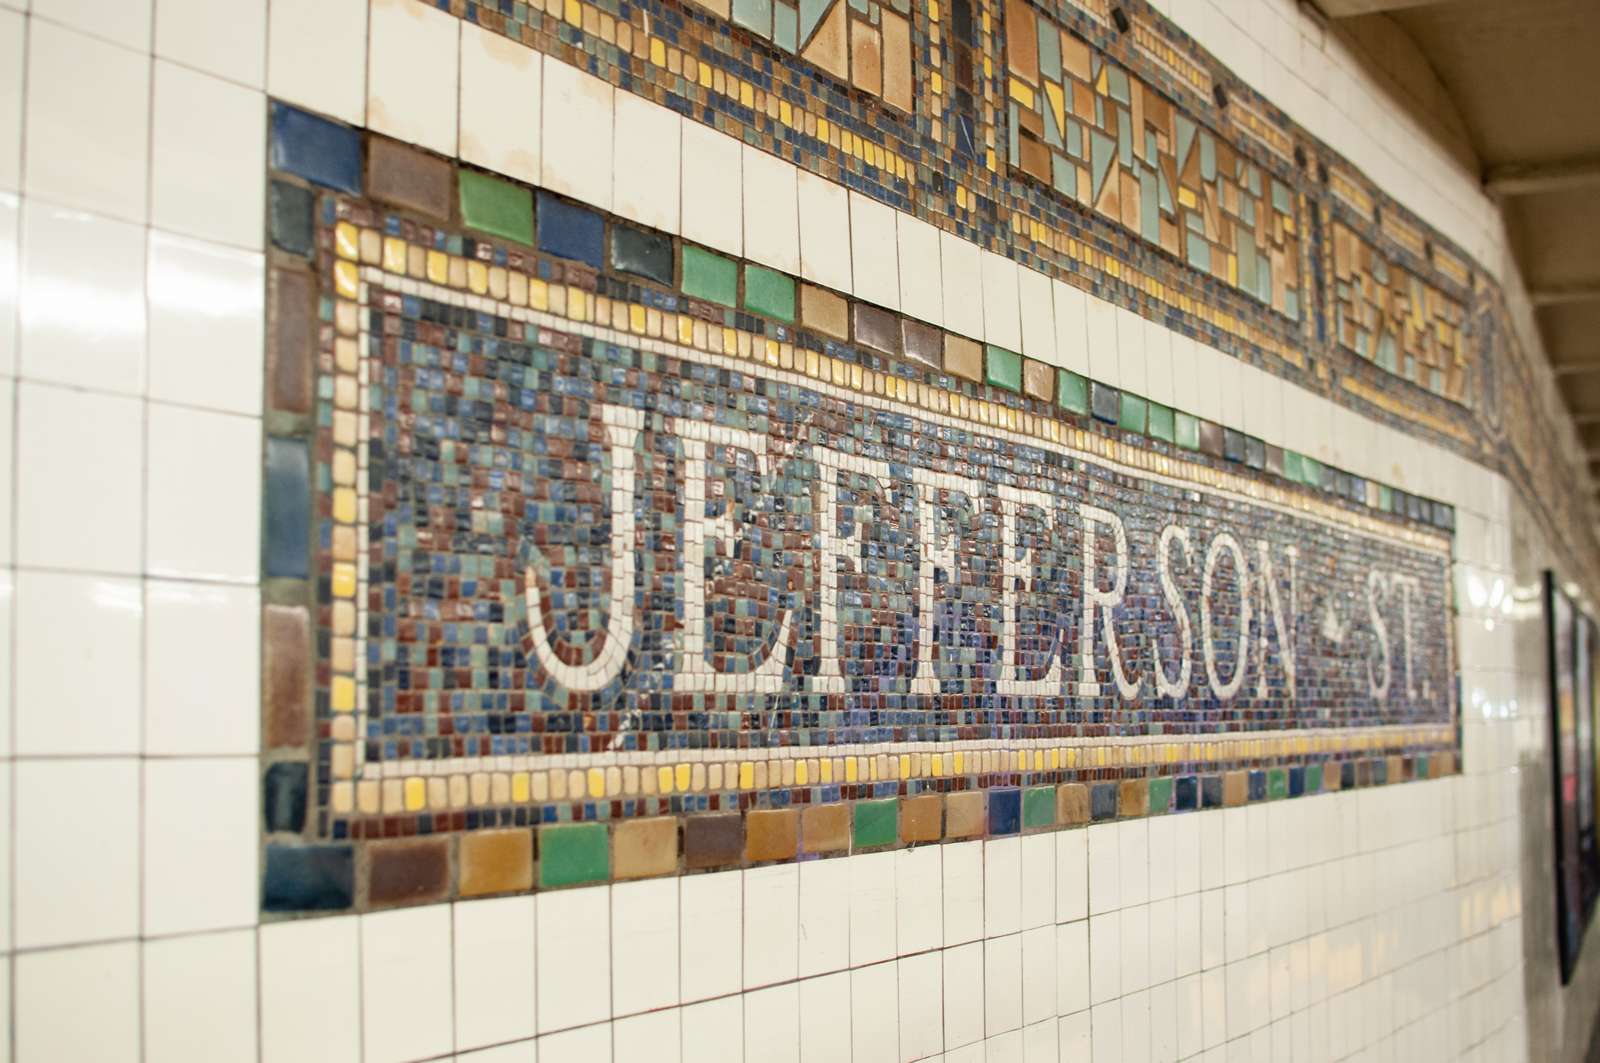 Jefferson St. interior subway tile sign